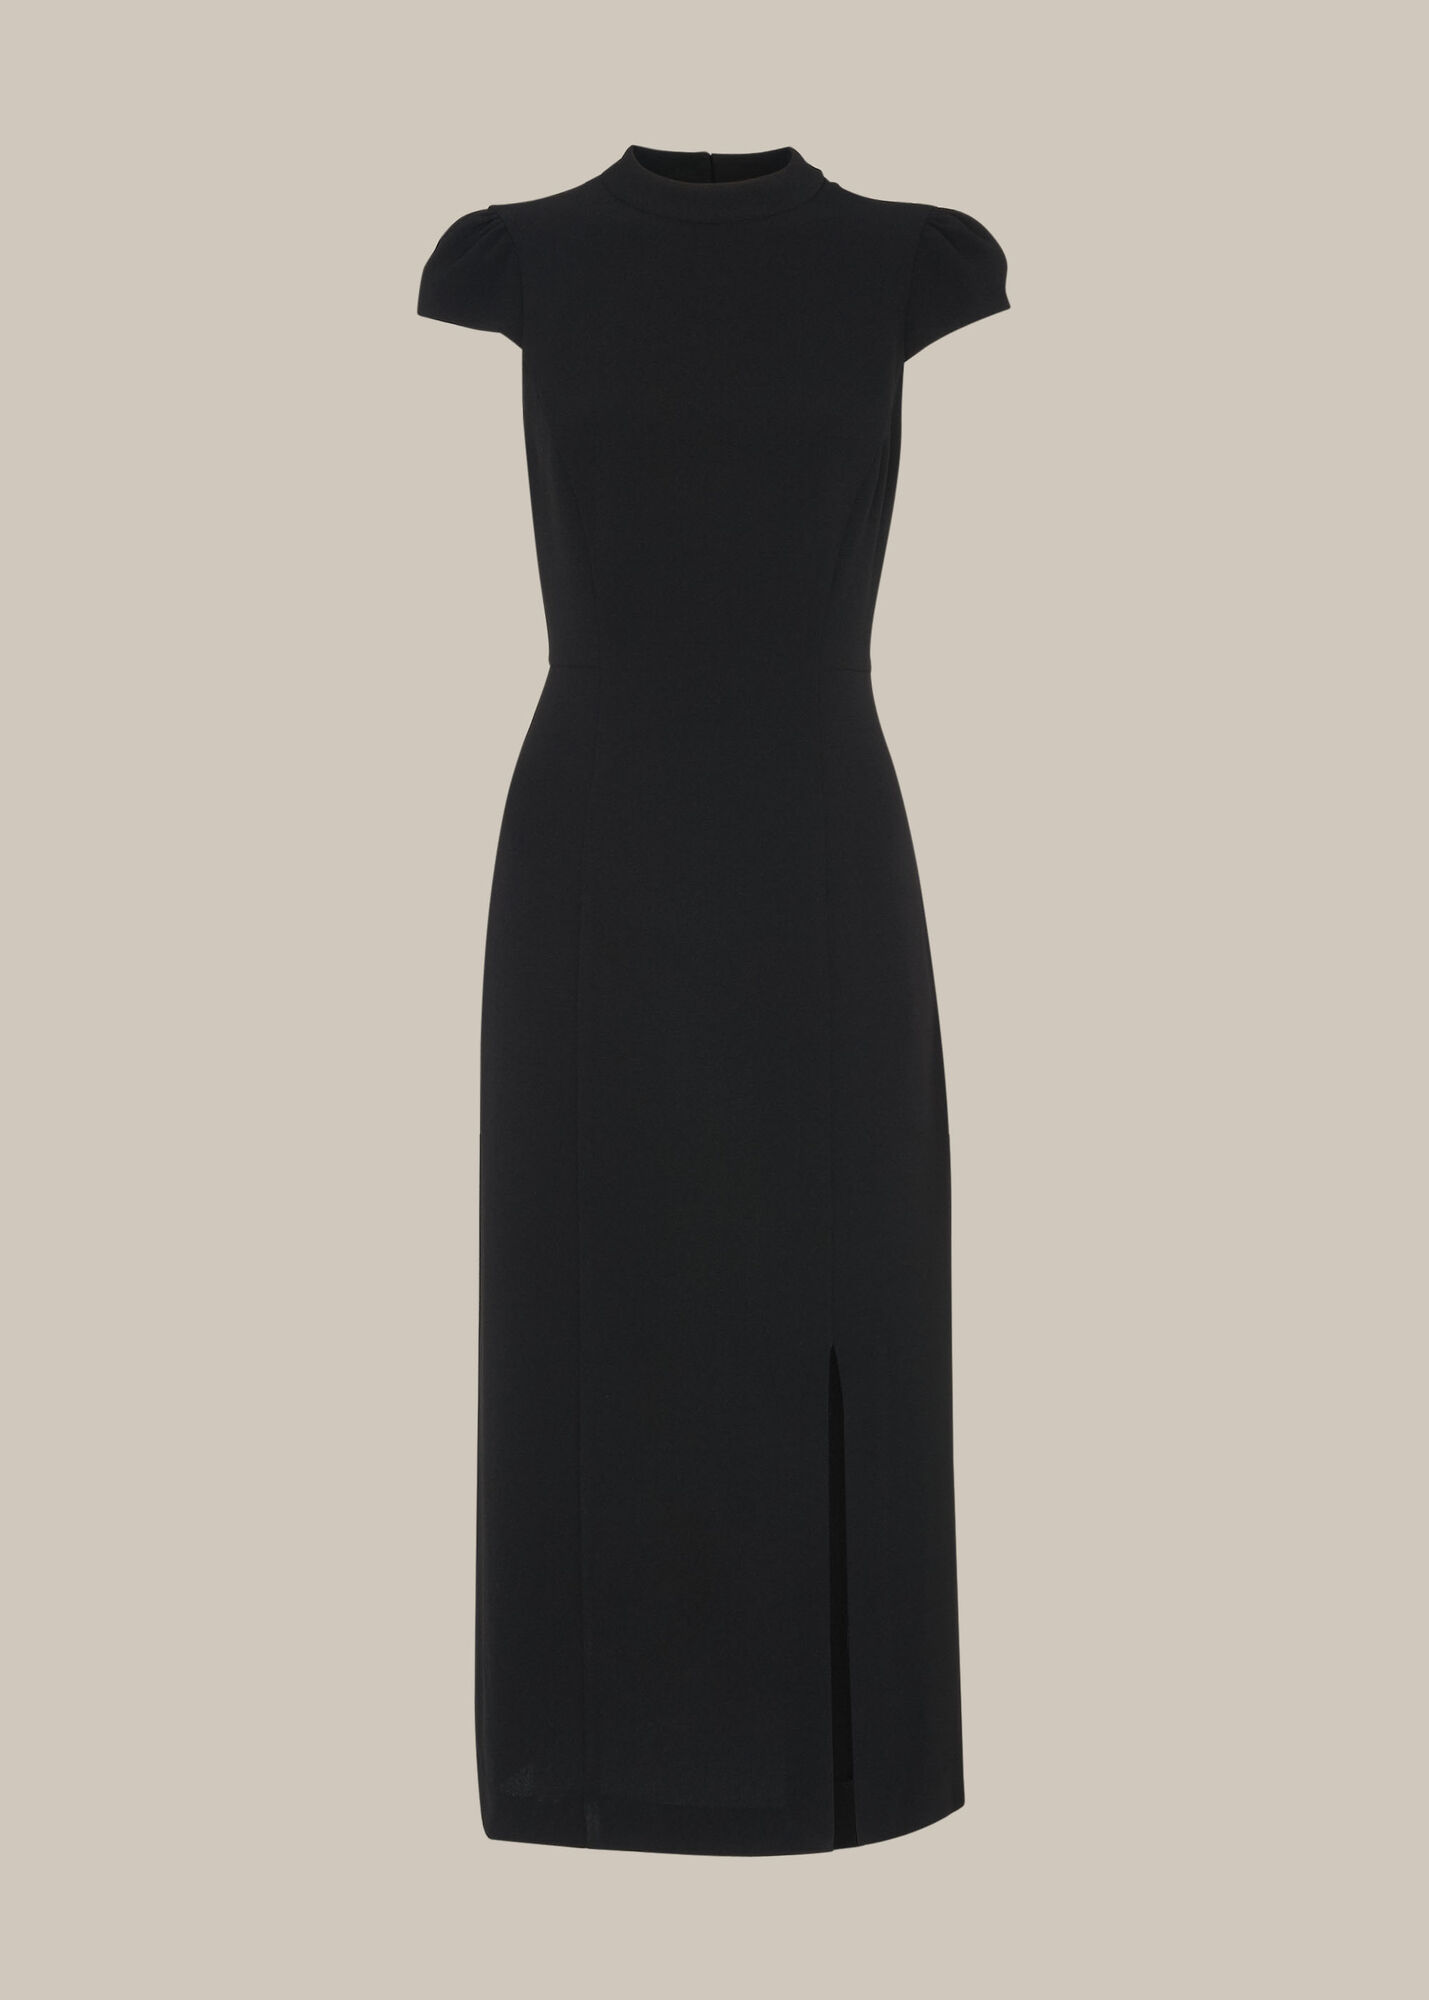 Black High Neck Textured Dress | WHISTLES